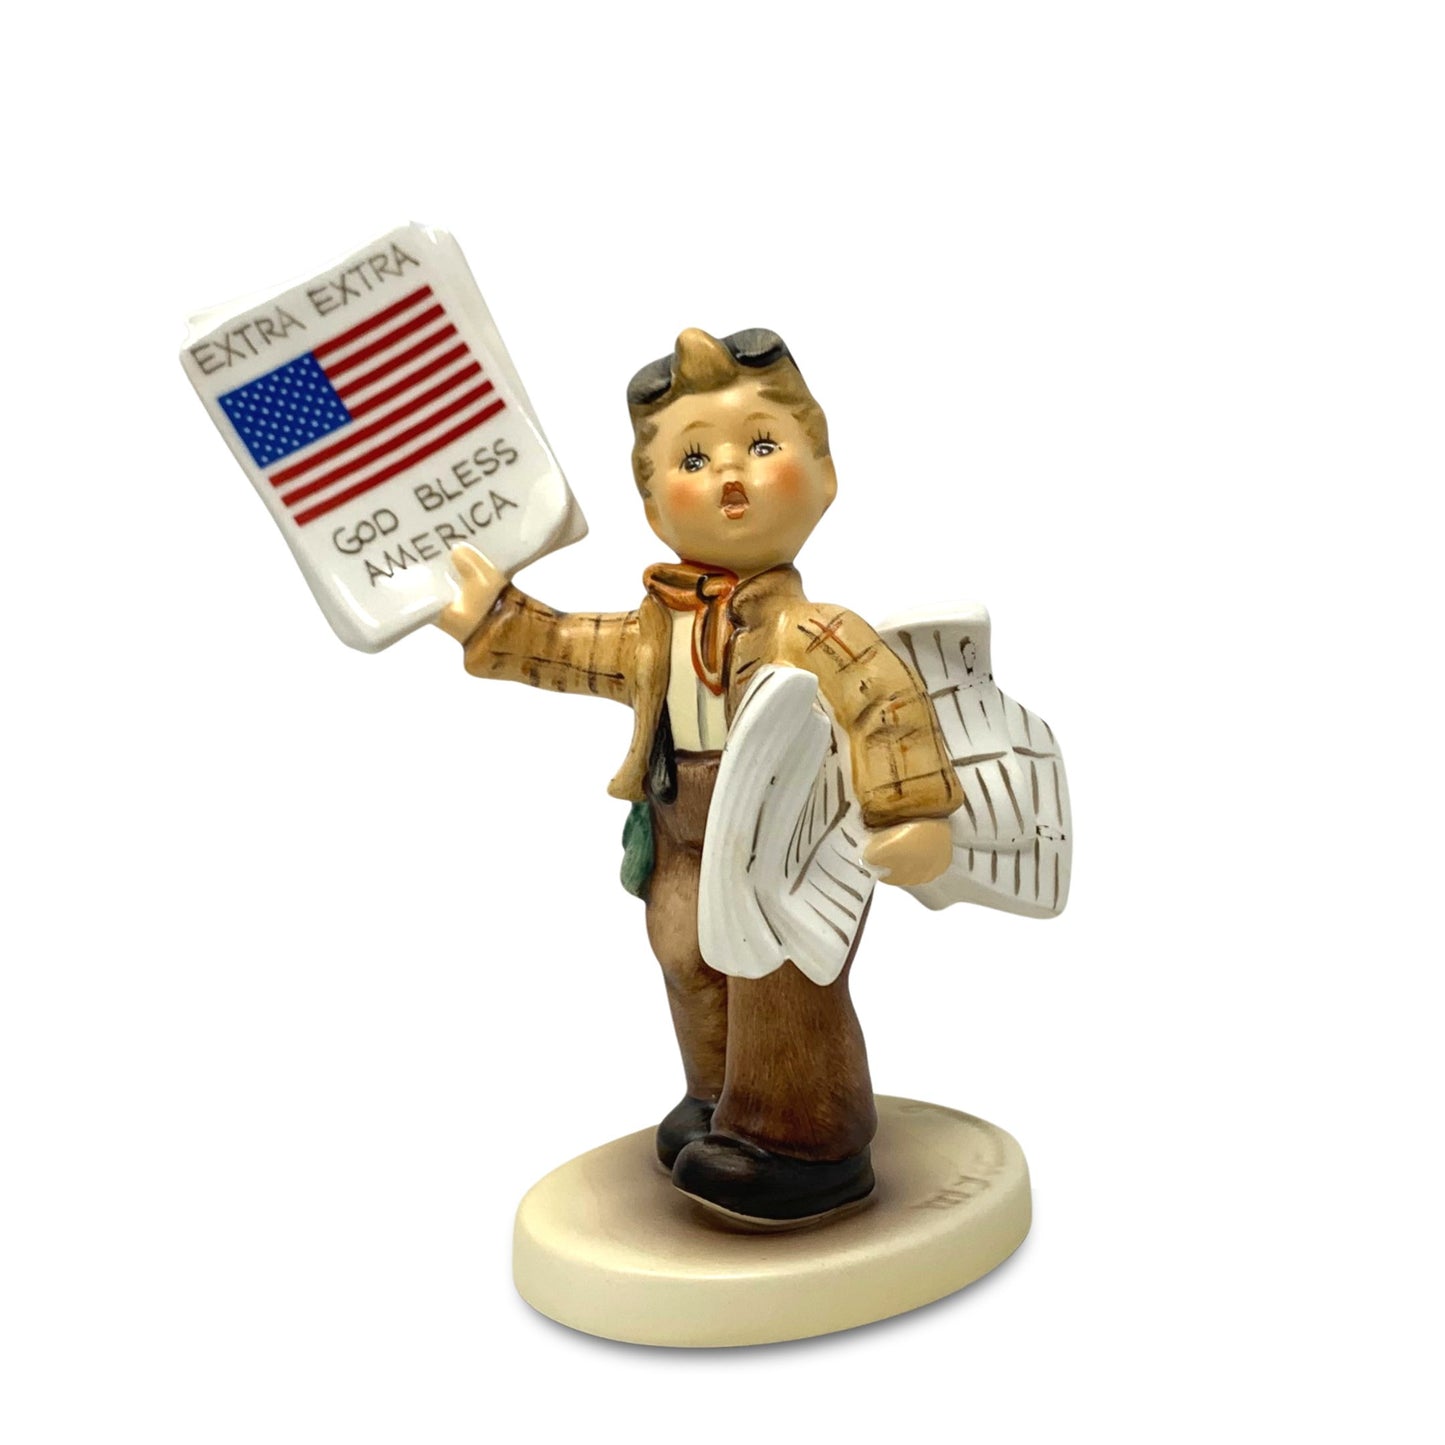 Goebel Hummel "Extra, Extra, God Bless America" Figurine TMK-8